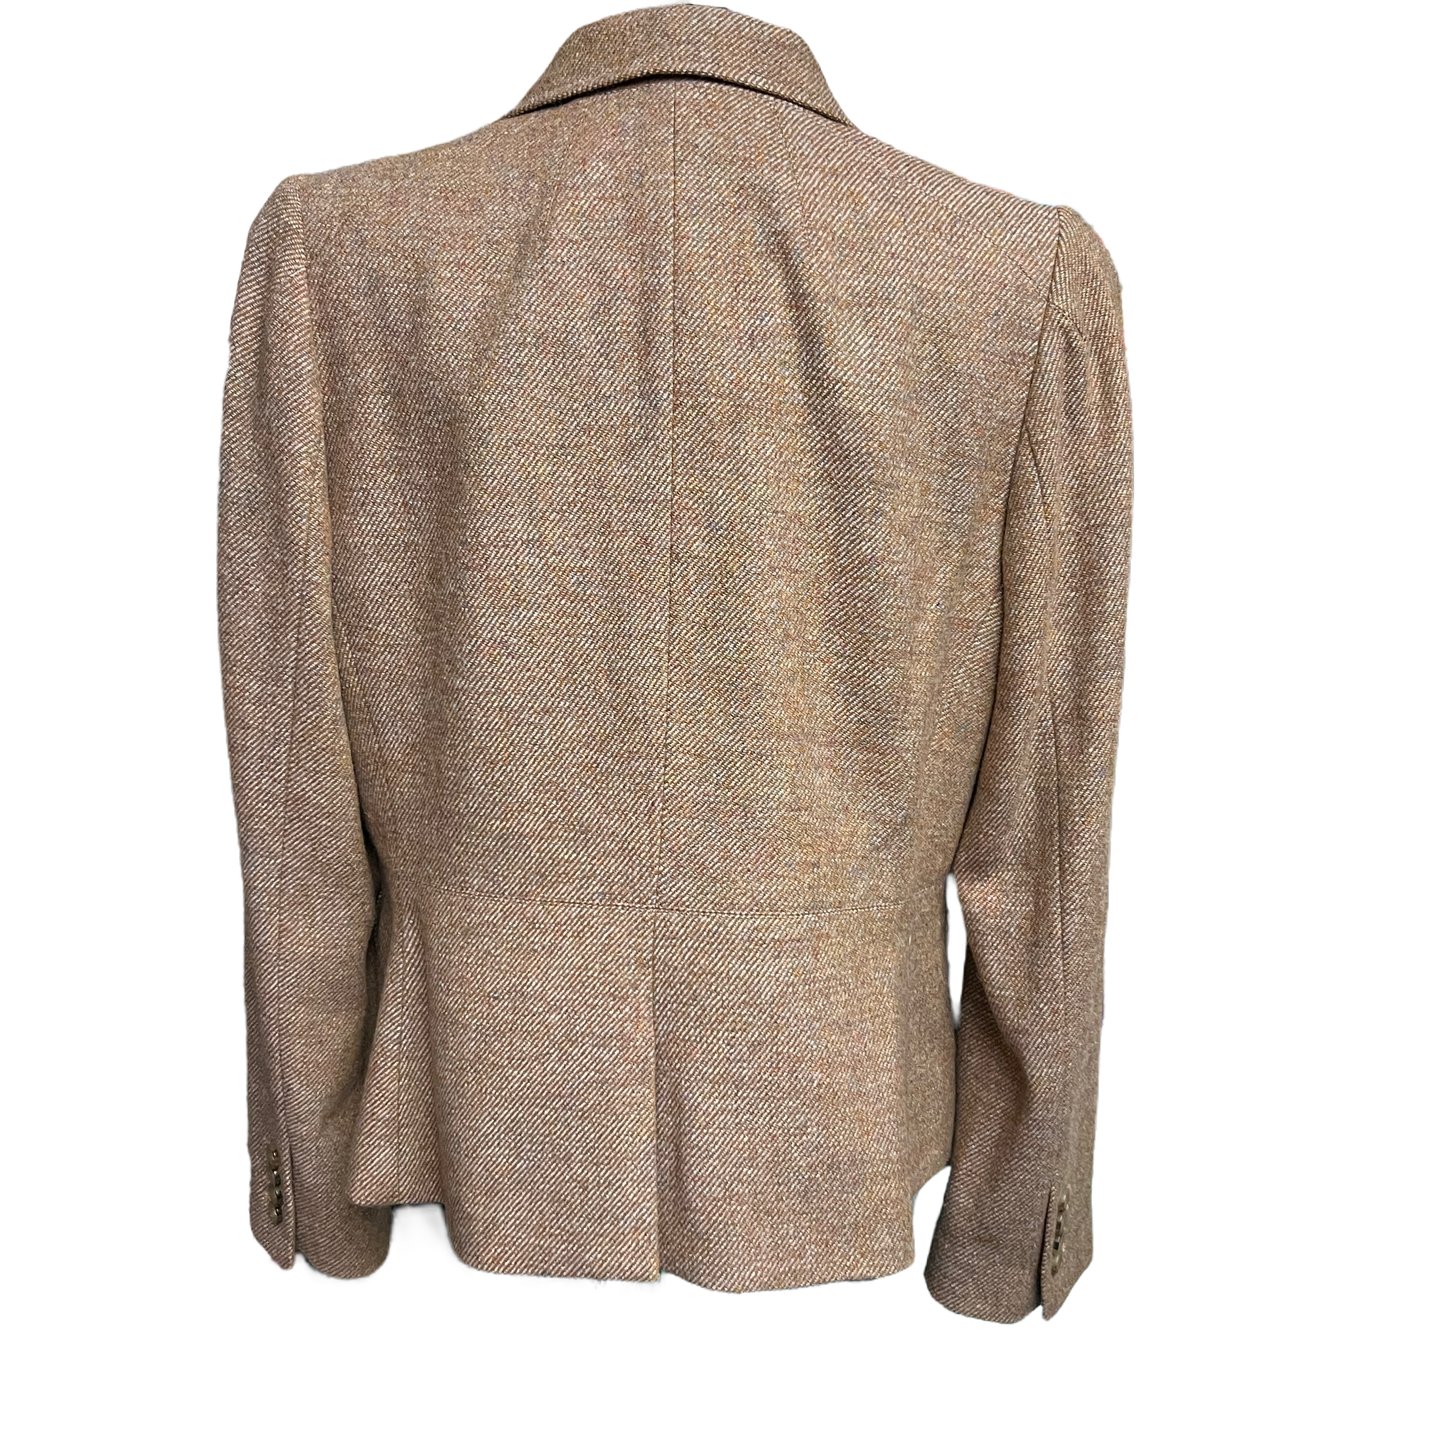 TALBOTS Petites - Brown Herringbone Wool Blazer Jacket - Size 2P